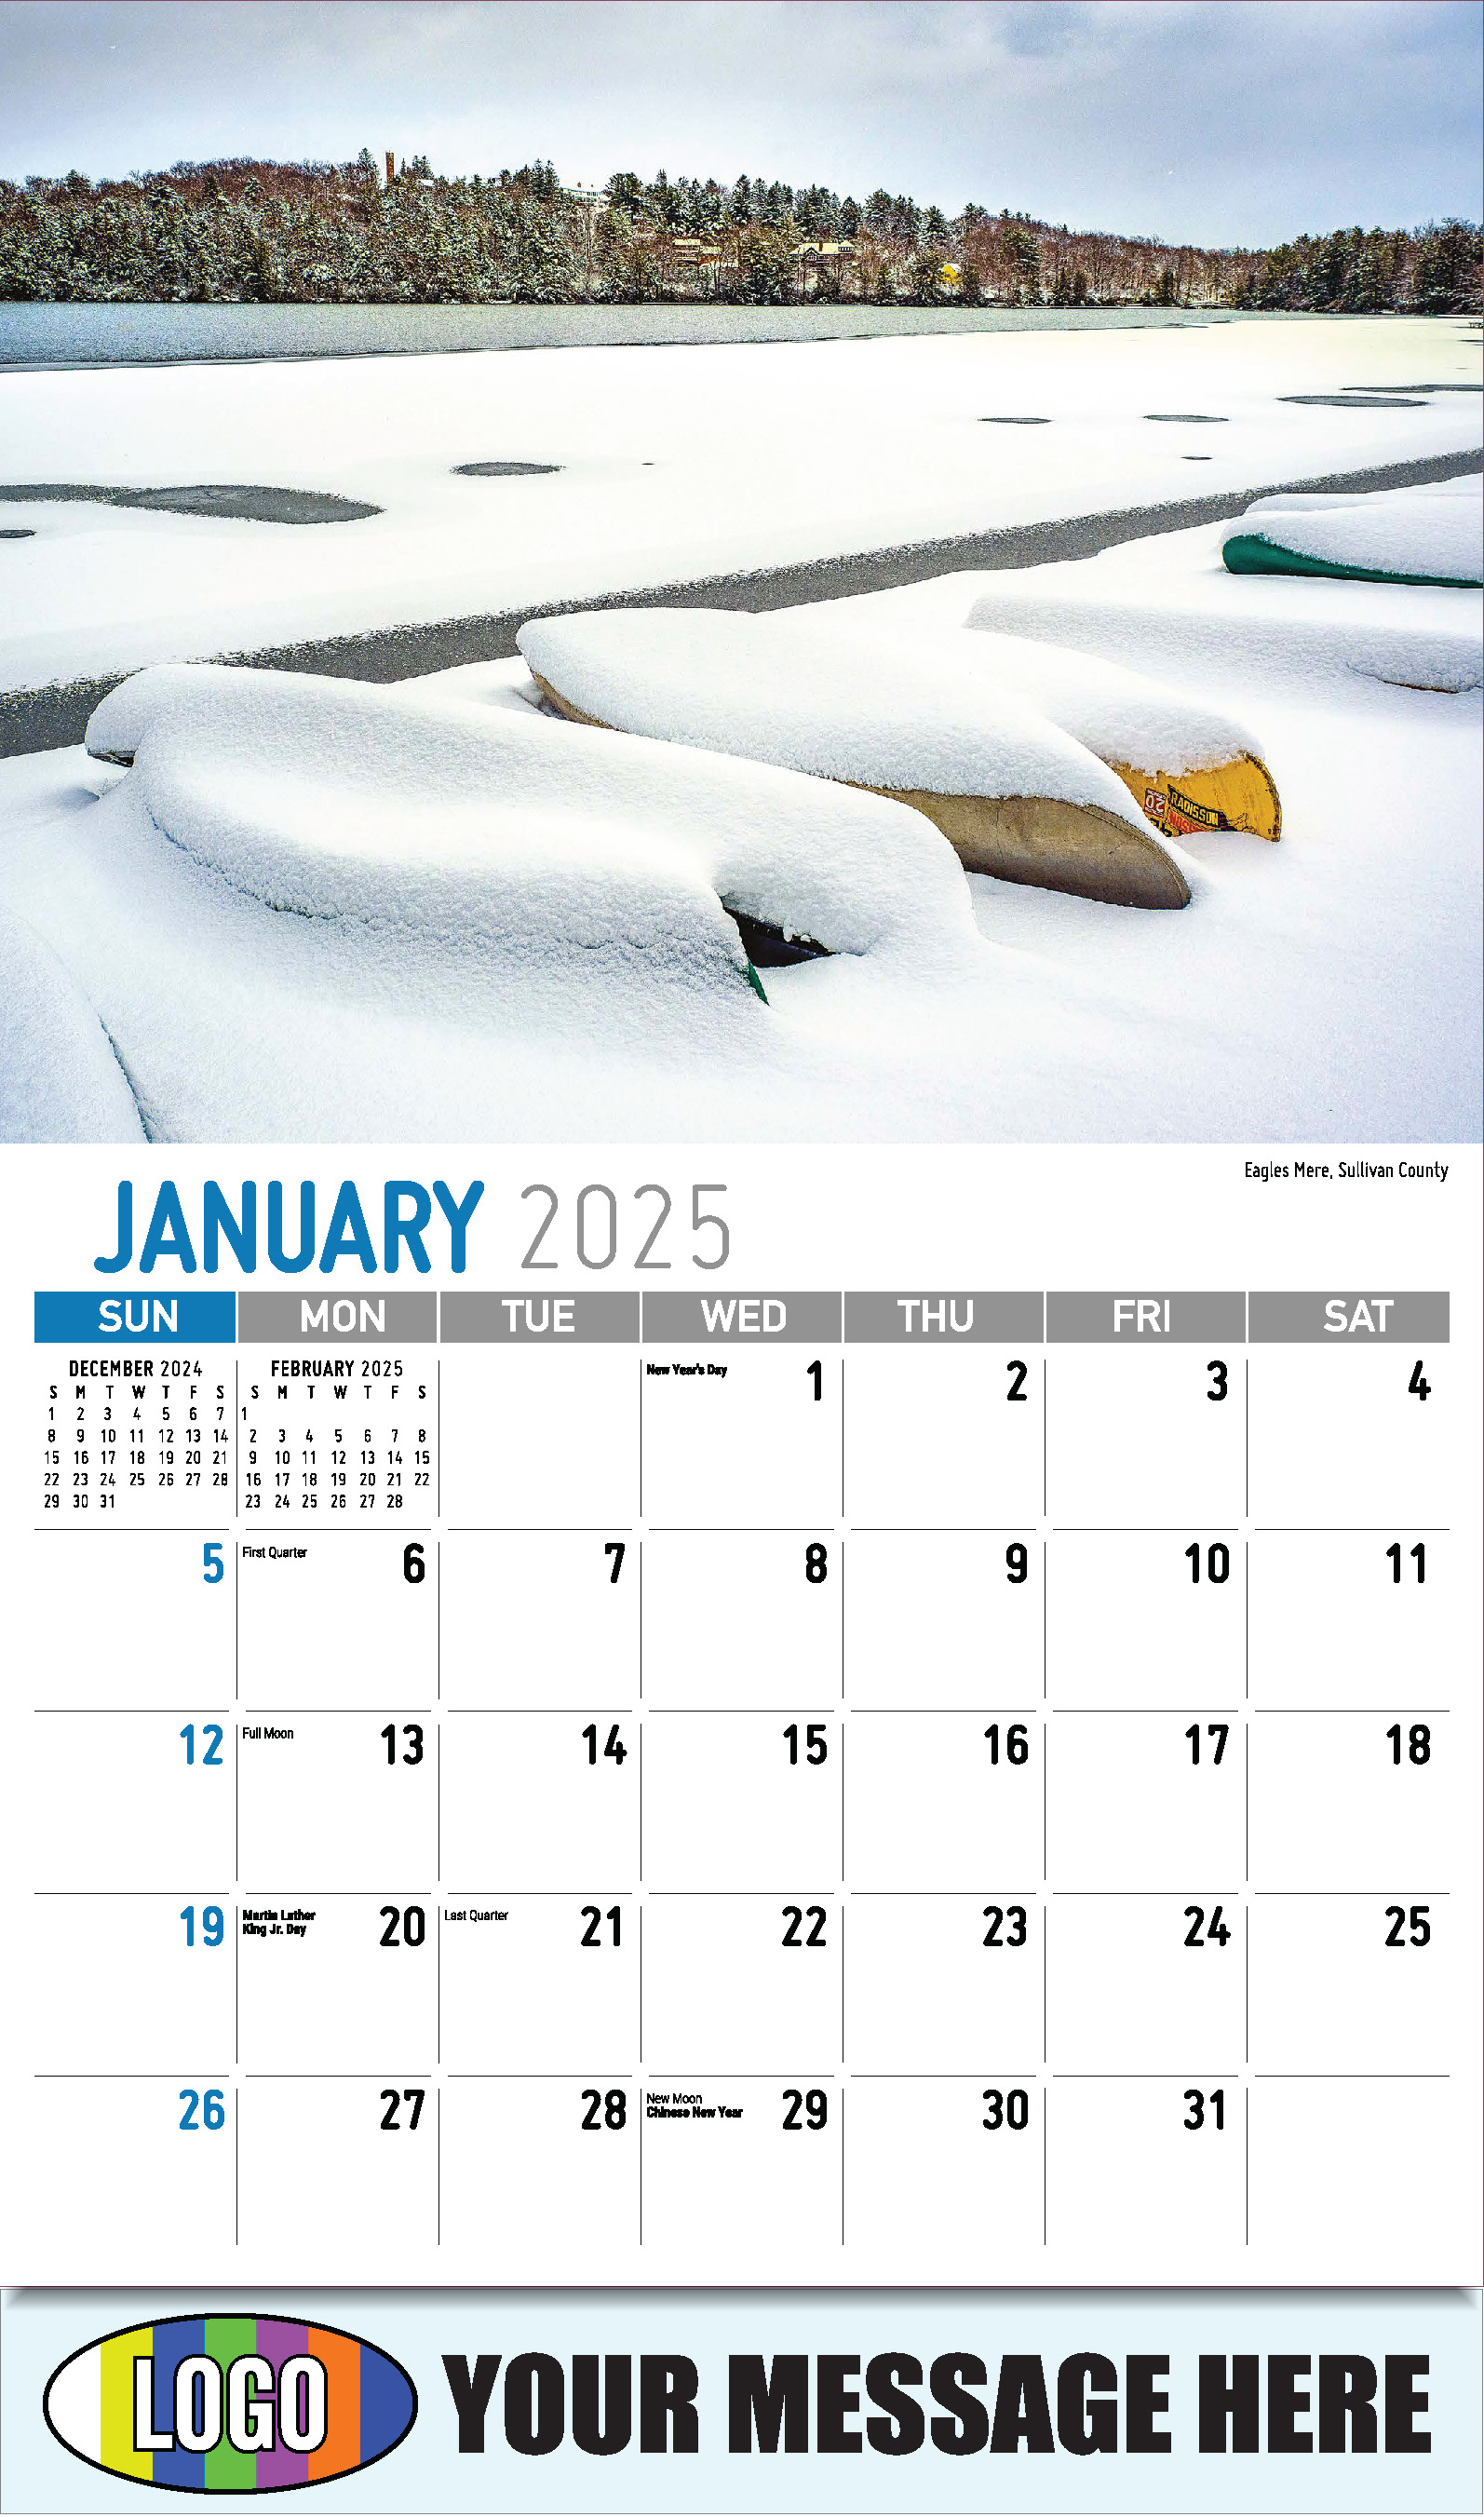 Scenes of Pennsylvania 2025 Business Promotion Calendar - January